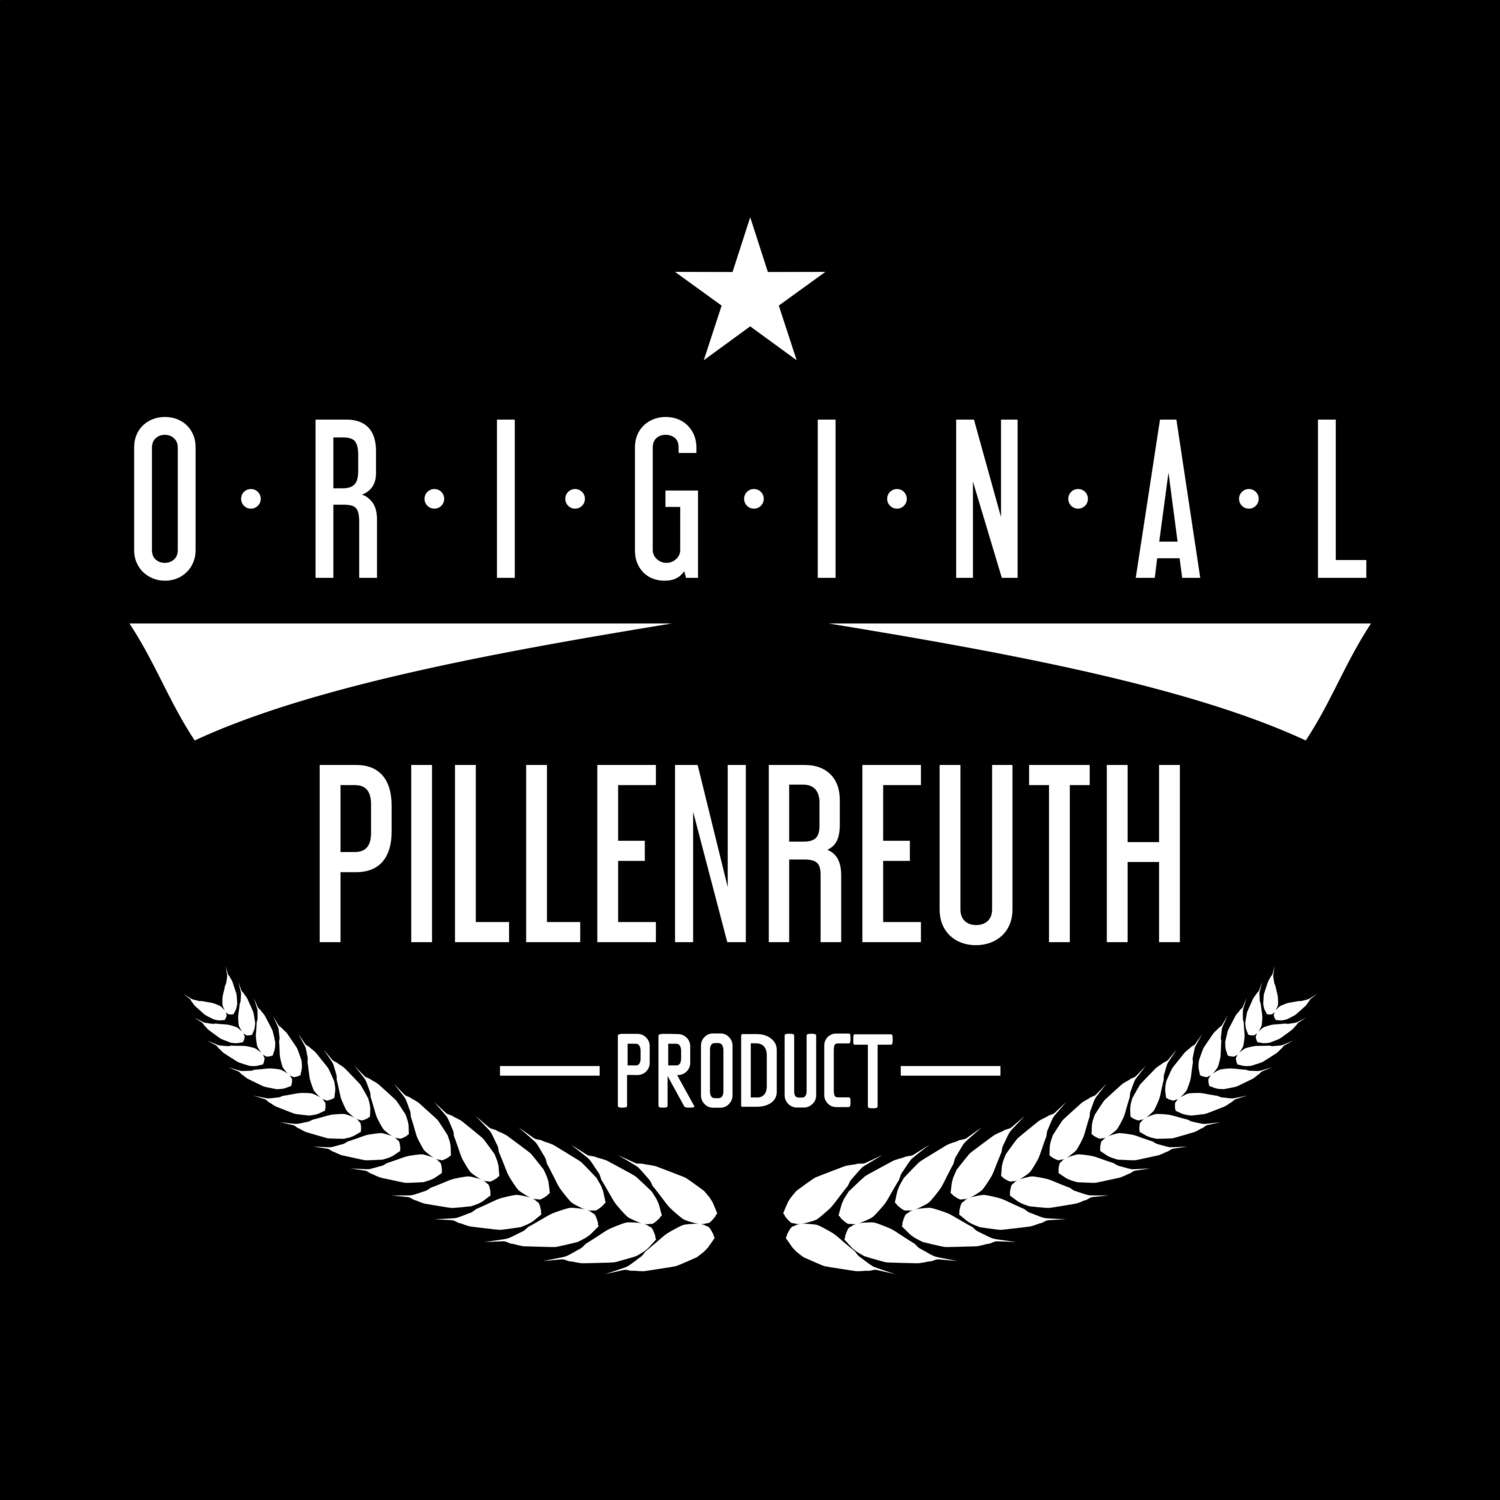 Pillenreuth T-Shirt »Original Product«